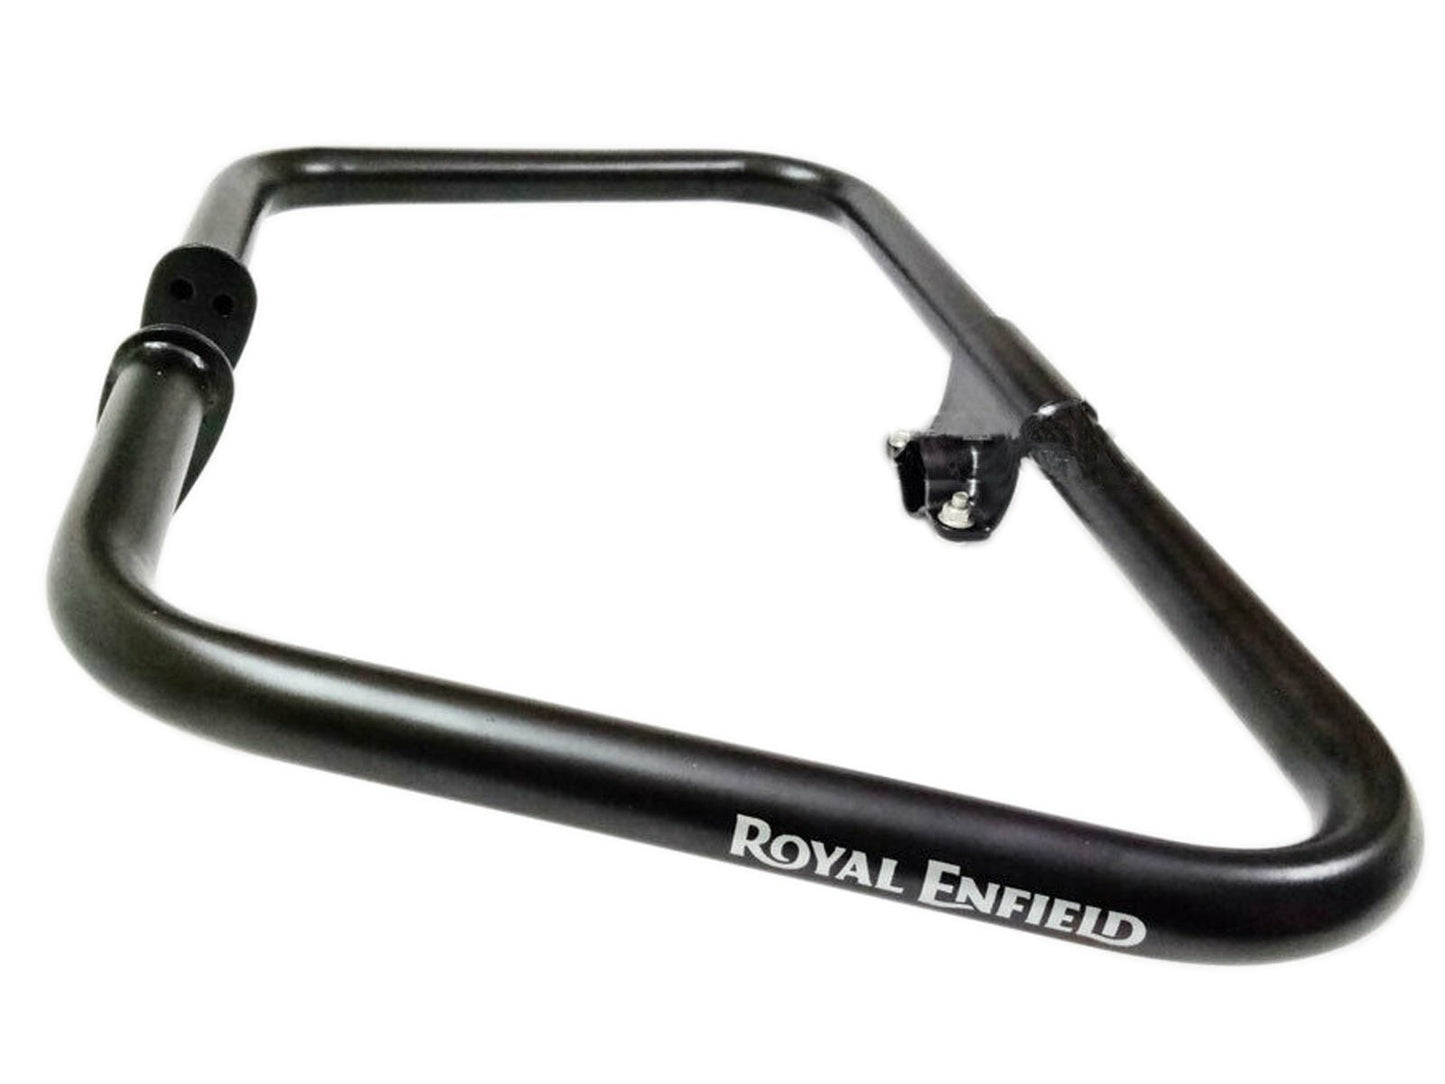 Genuine Royal Enfield Front Crash Bar Black For Fuel Sensor Classic 500cc Model